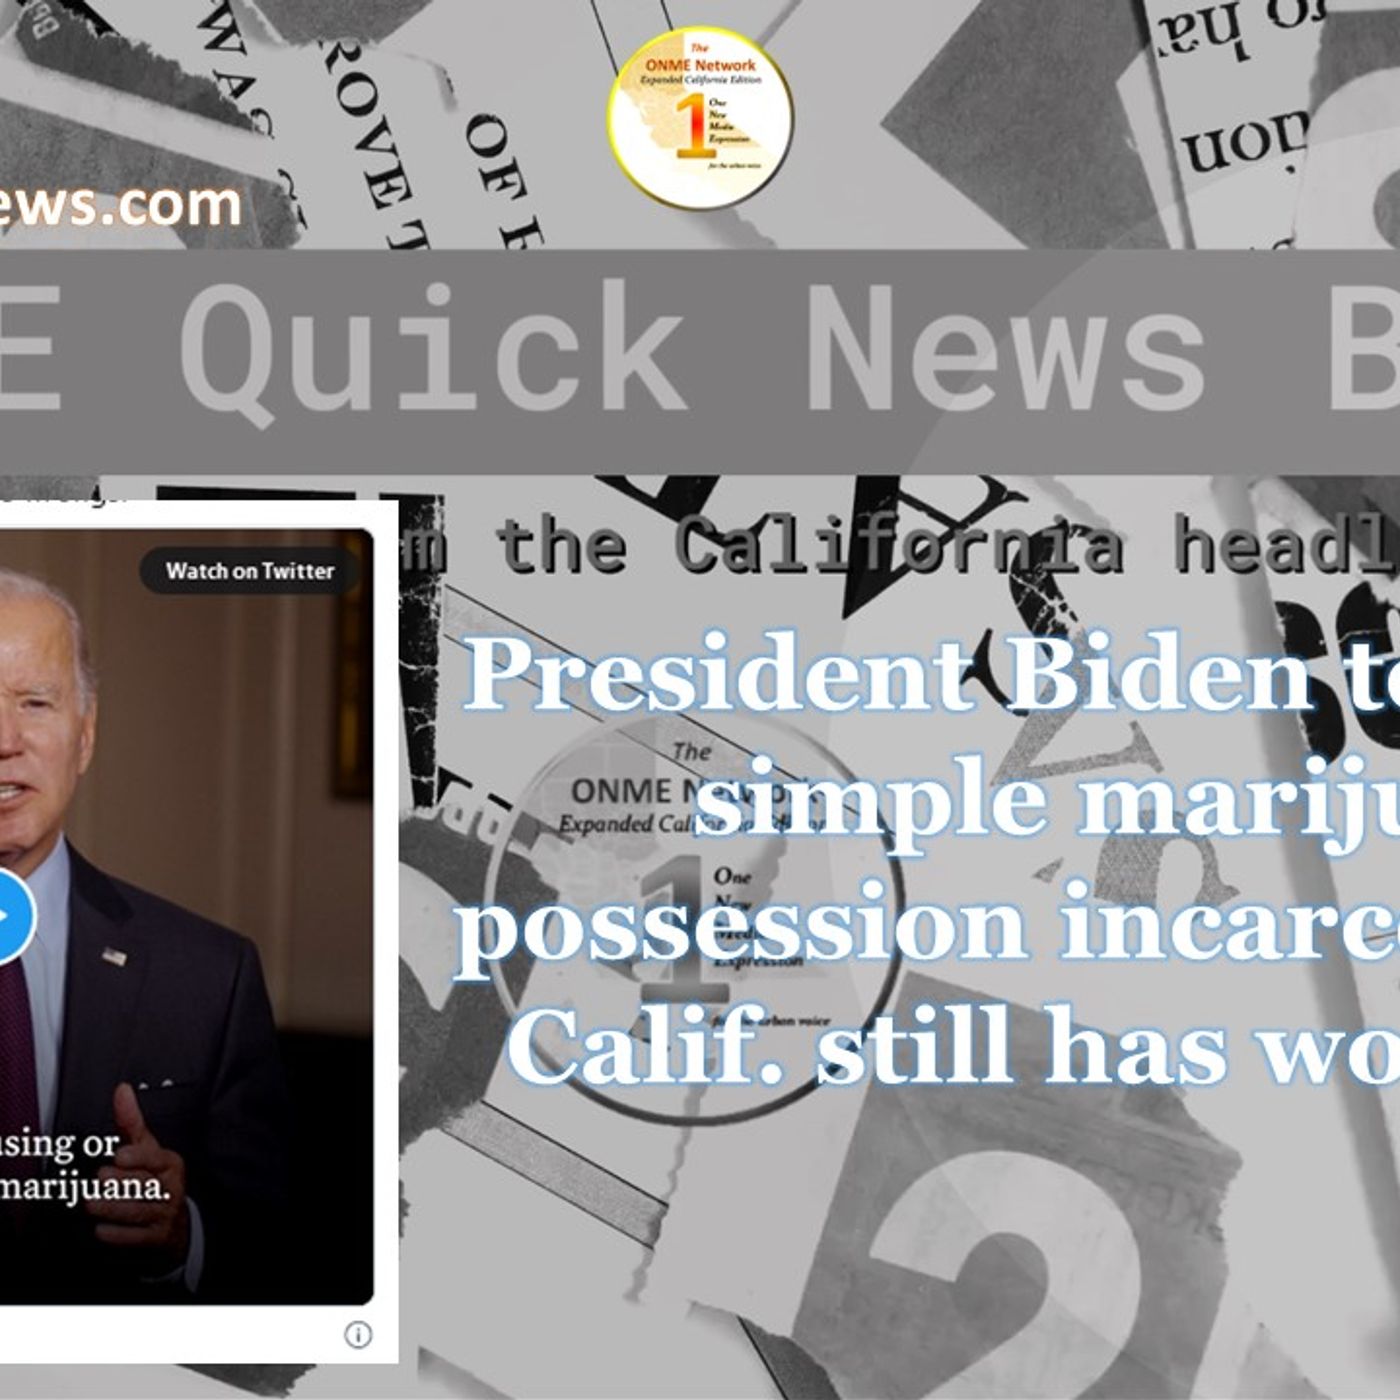 President Biden to pardon simple marijuana possession incarcerations; Calif. still has work to do